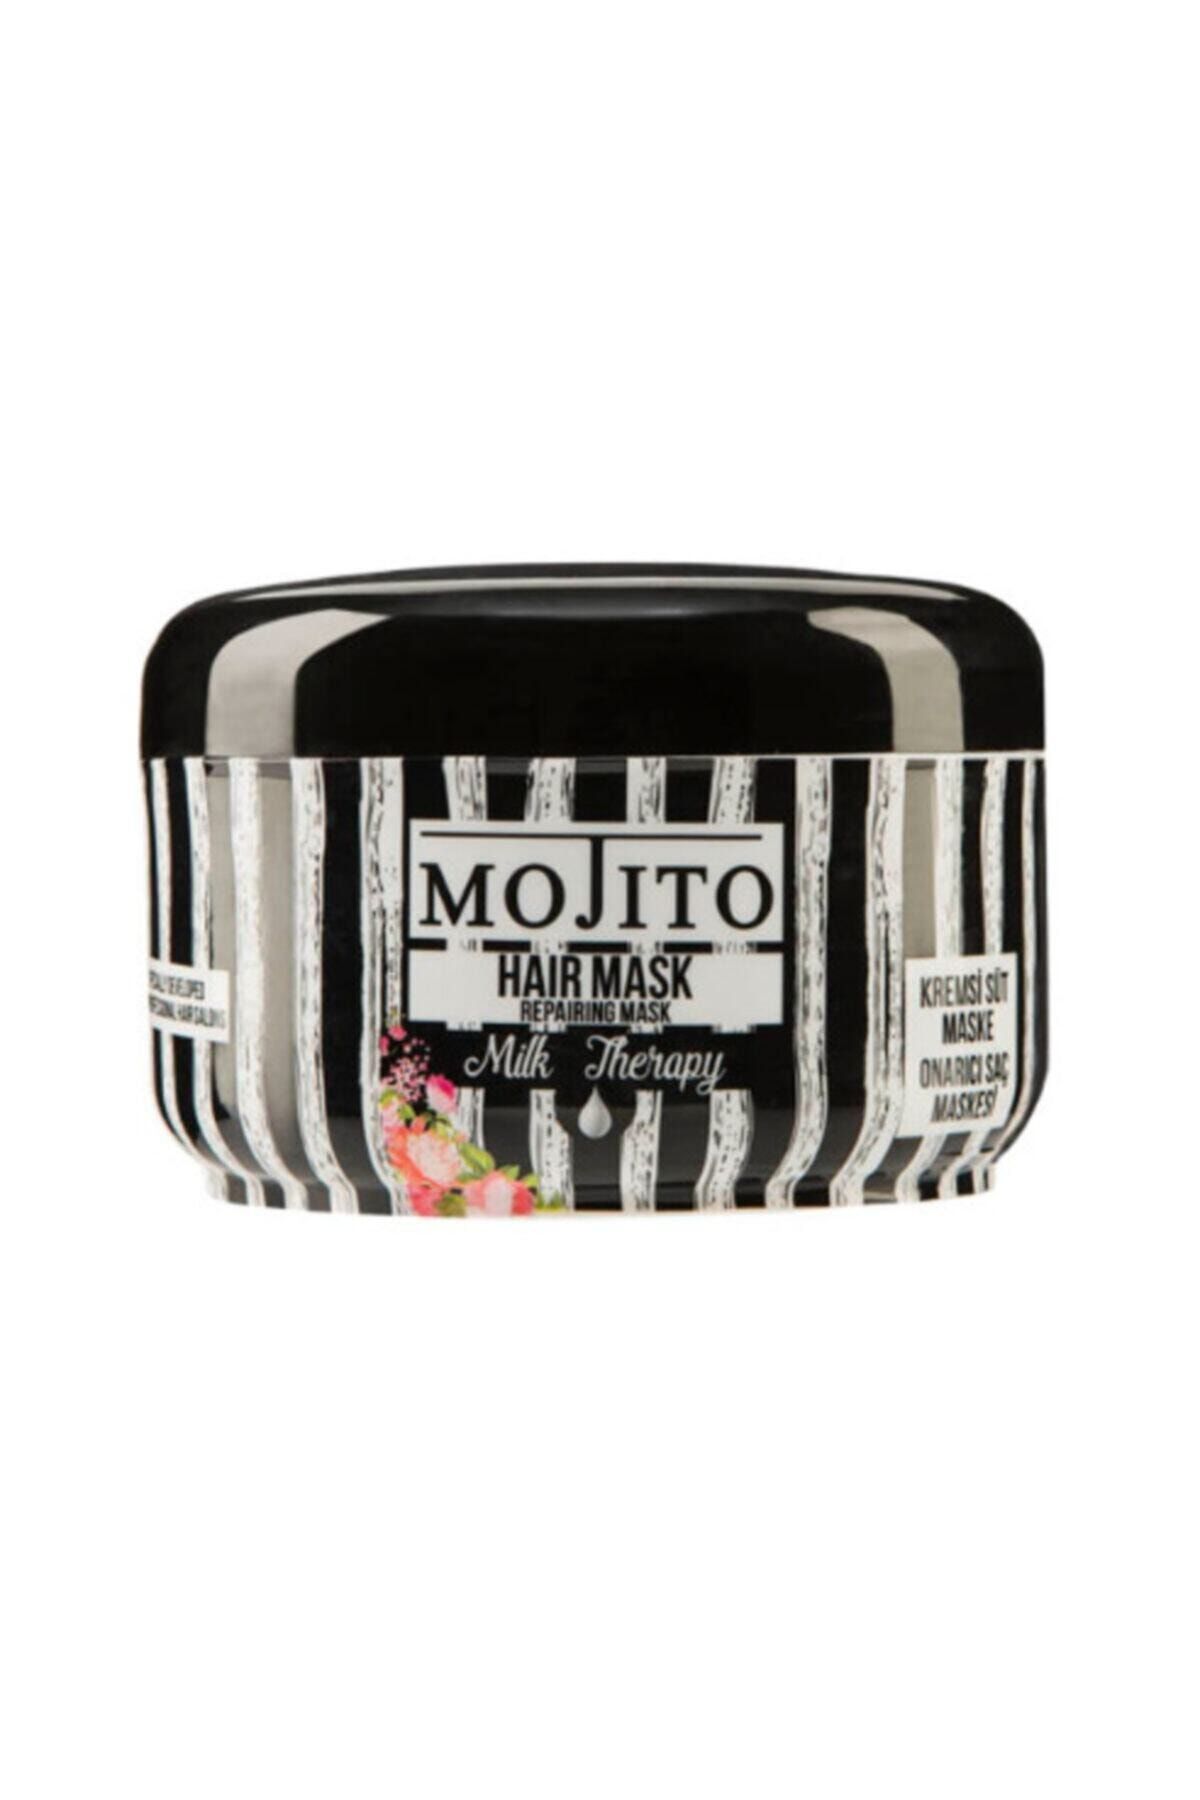 Mojito Milk Therapy Onarıcı Saç Bakım Maskesi 500ml